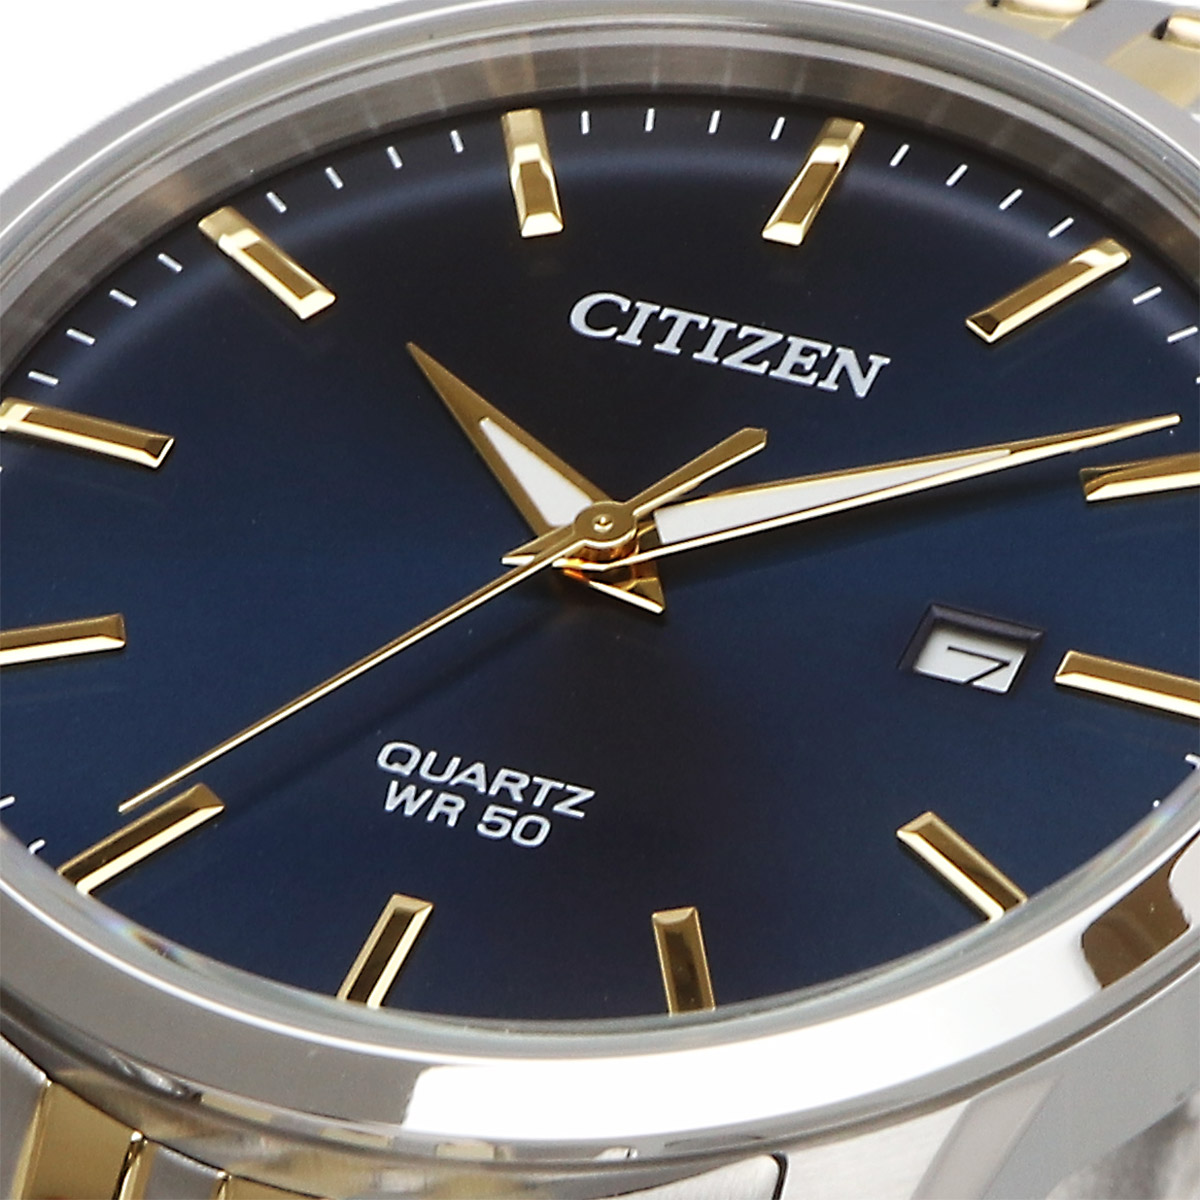 CITIZEN シチズン 腕時計 メンズ 海外モデル クォーツ シンプル 